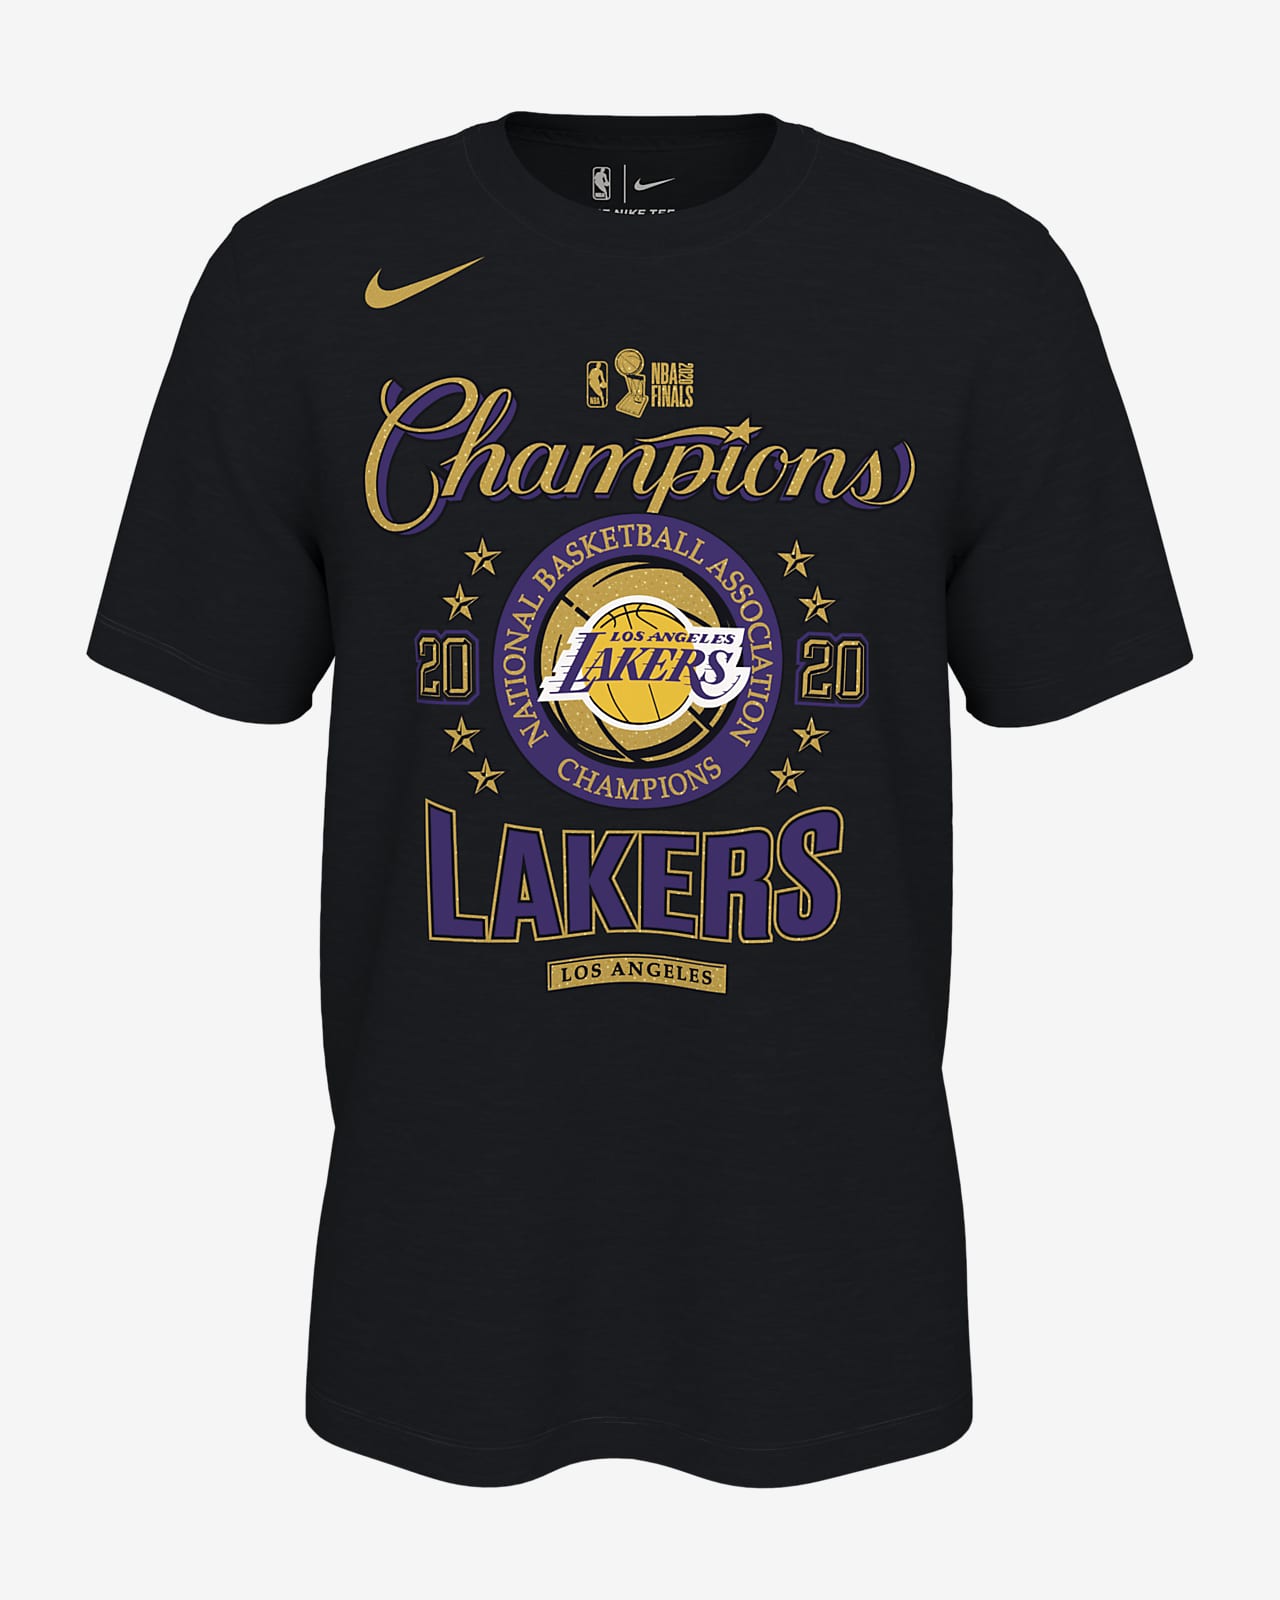 Los Angeles Lakers Champions Nike NBA Locker Room T-Shirt ...